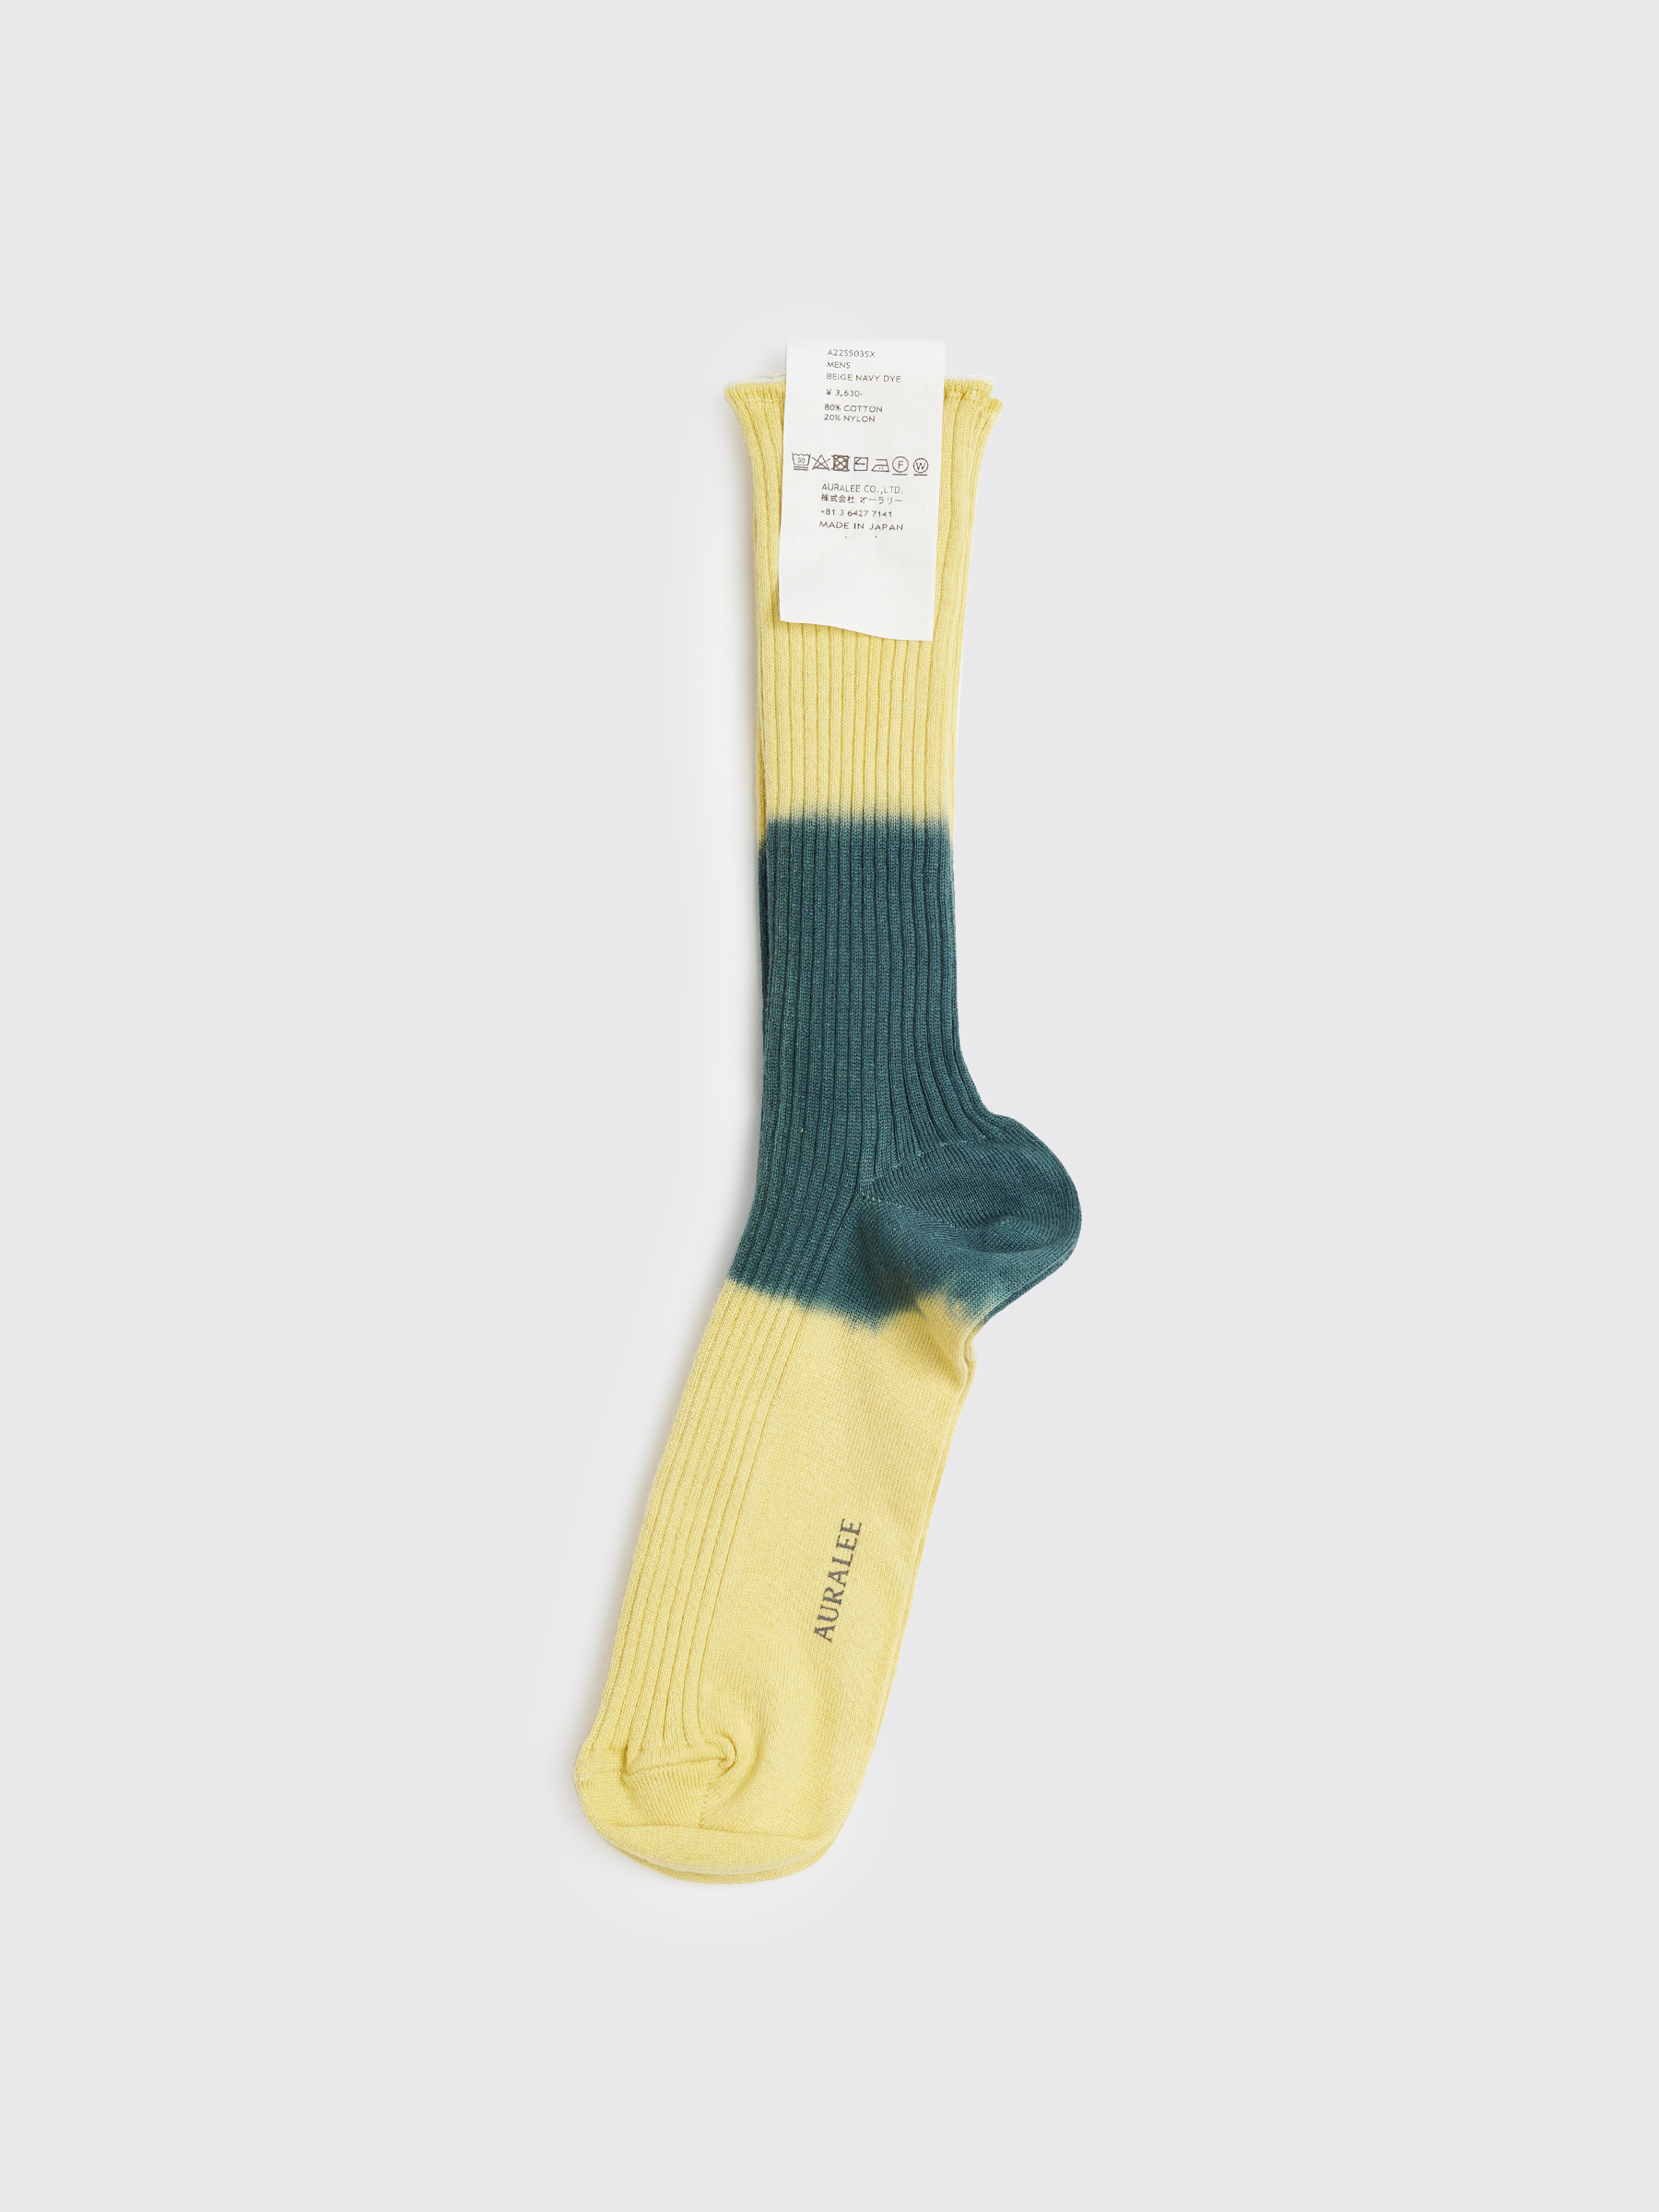 Très Bien - Auralee Giza Cotton High Gauge Dyed Socks Beige / Navy